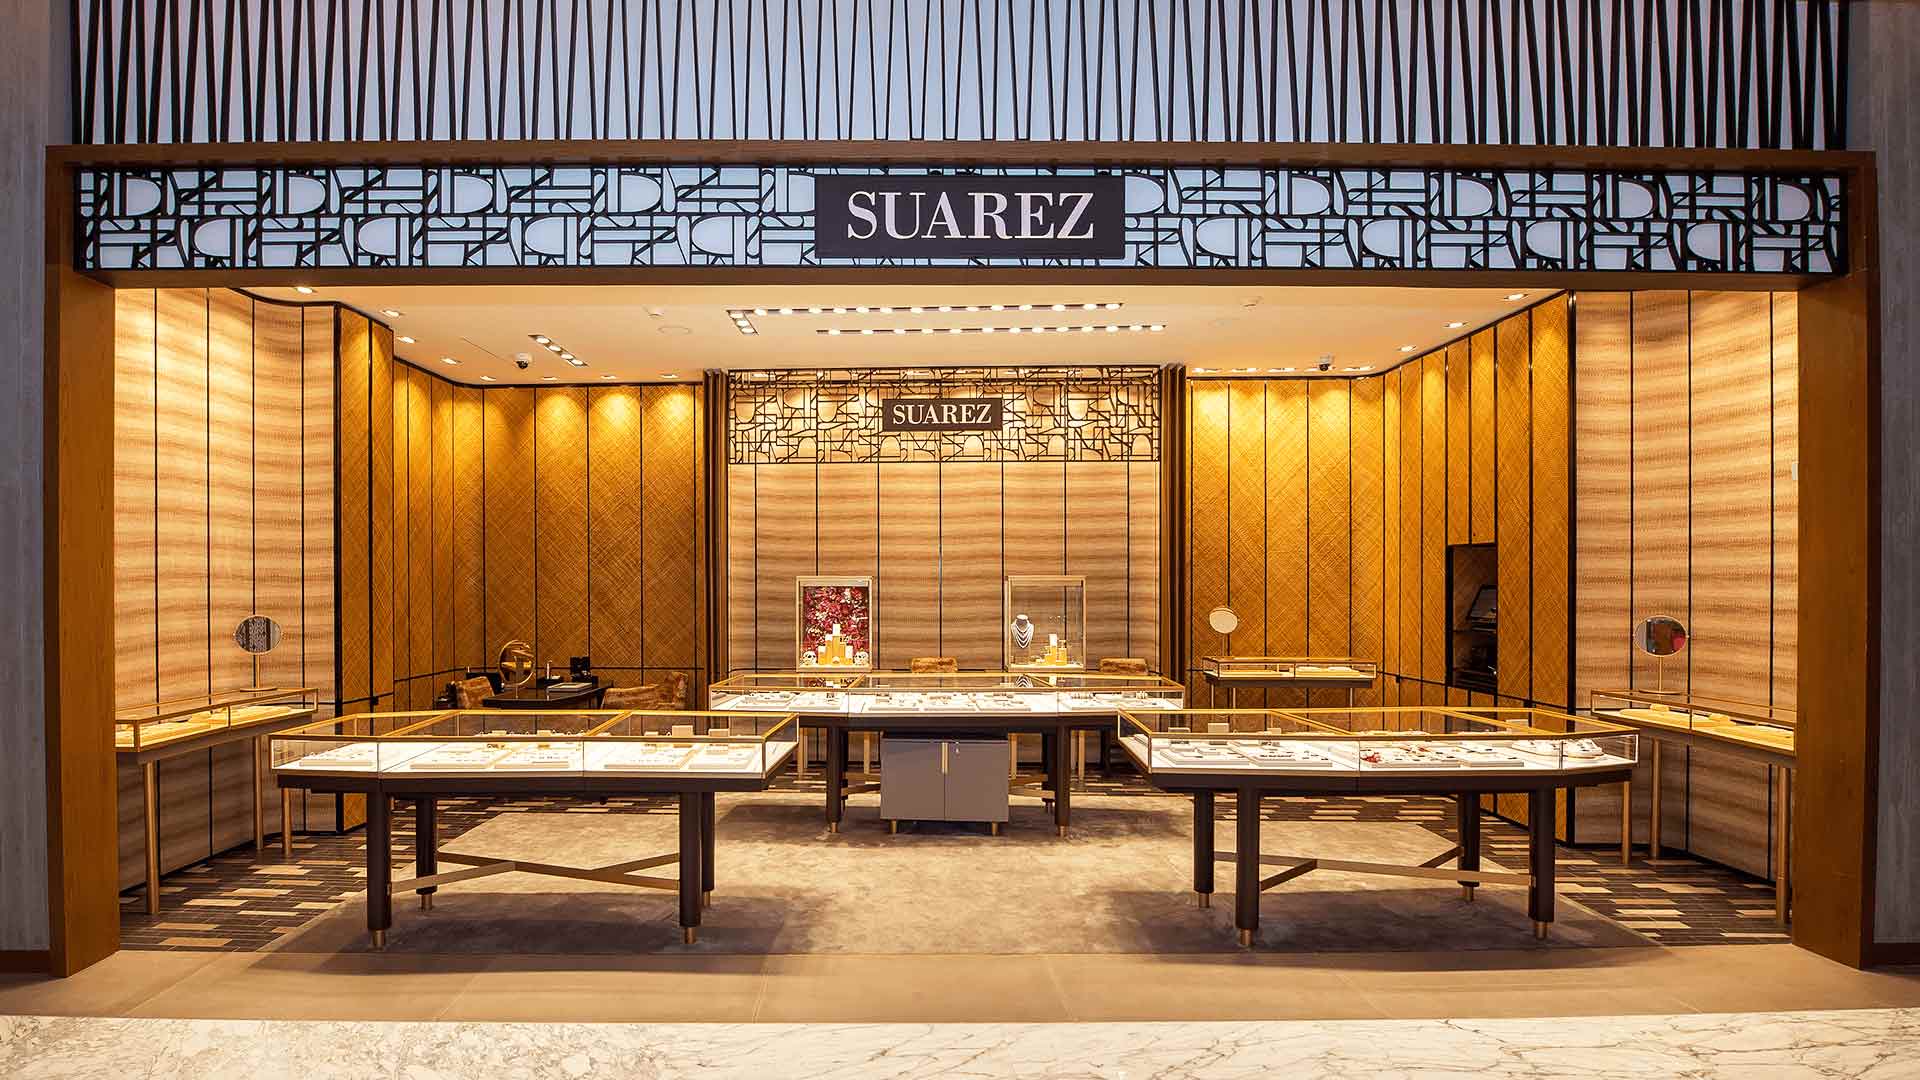 Building the Suárez jewellery store in Mexico